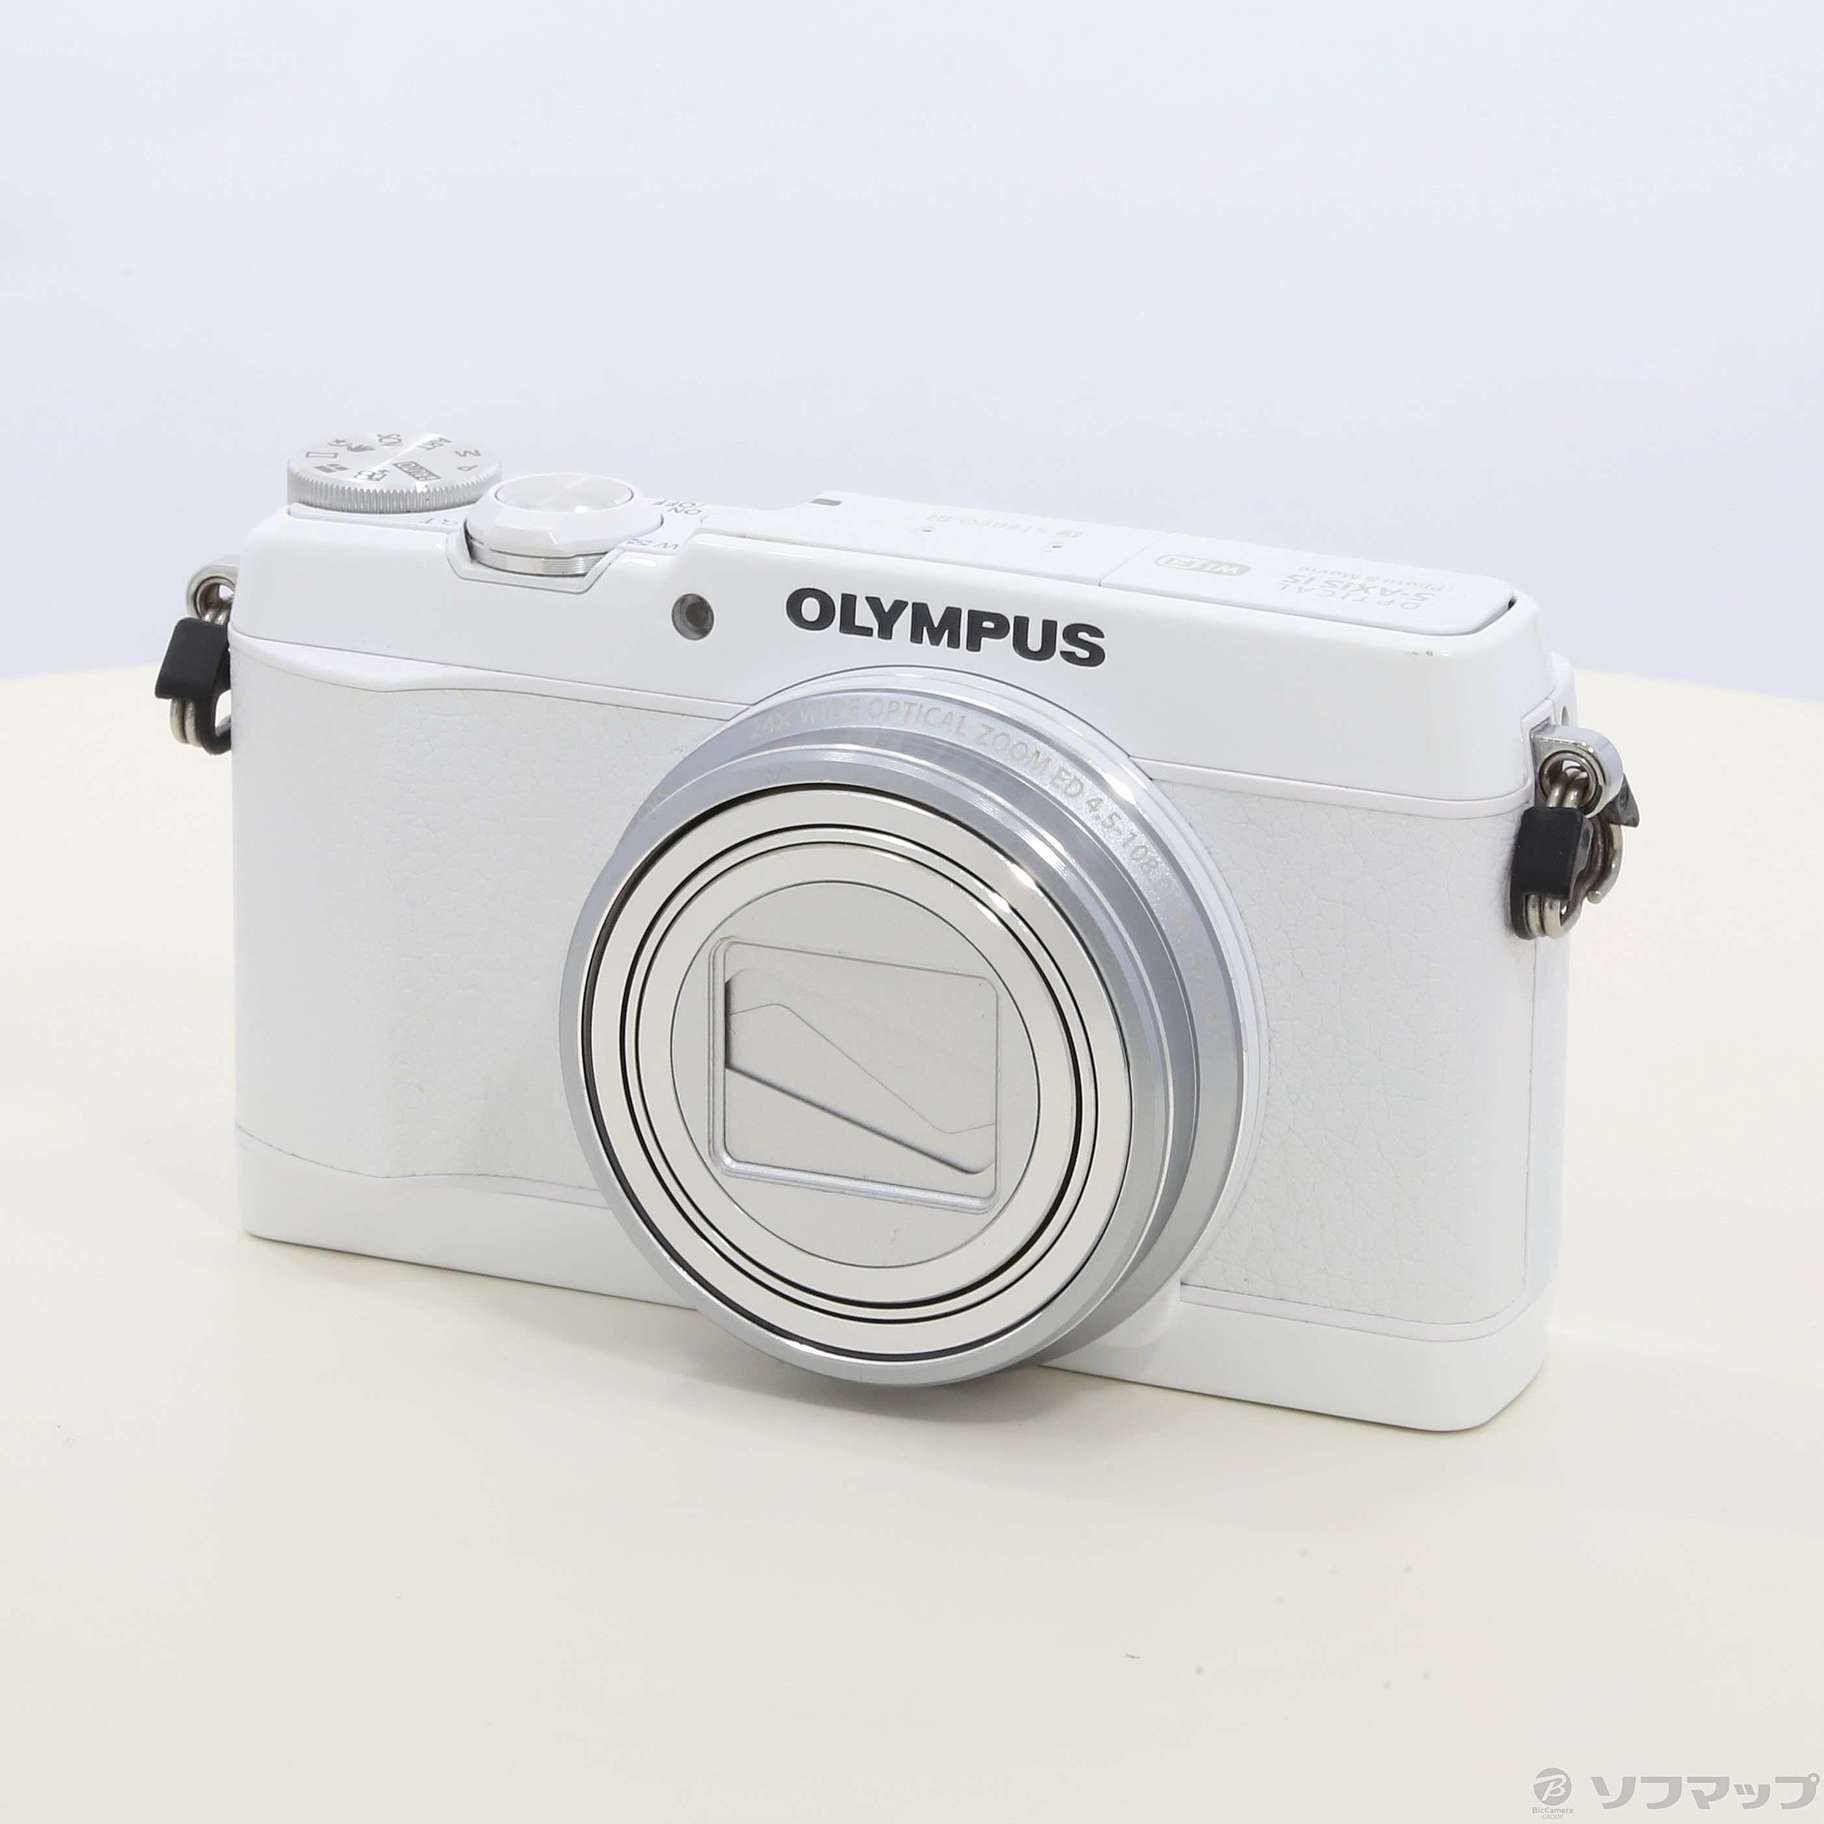 OLYMPUS オリンパス STYLUS SH-1 シルバー - コンパクトデジタルカメラ